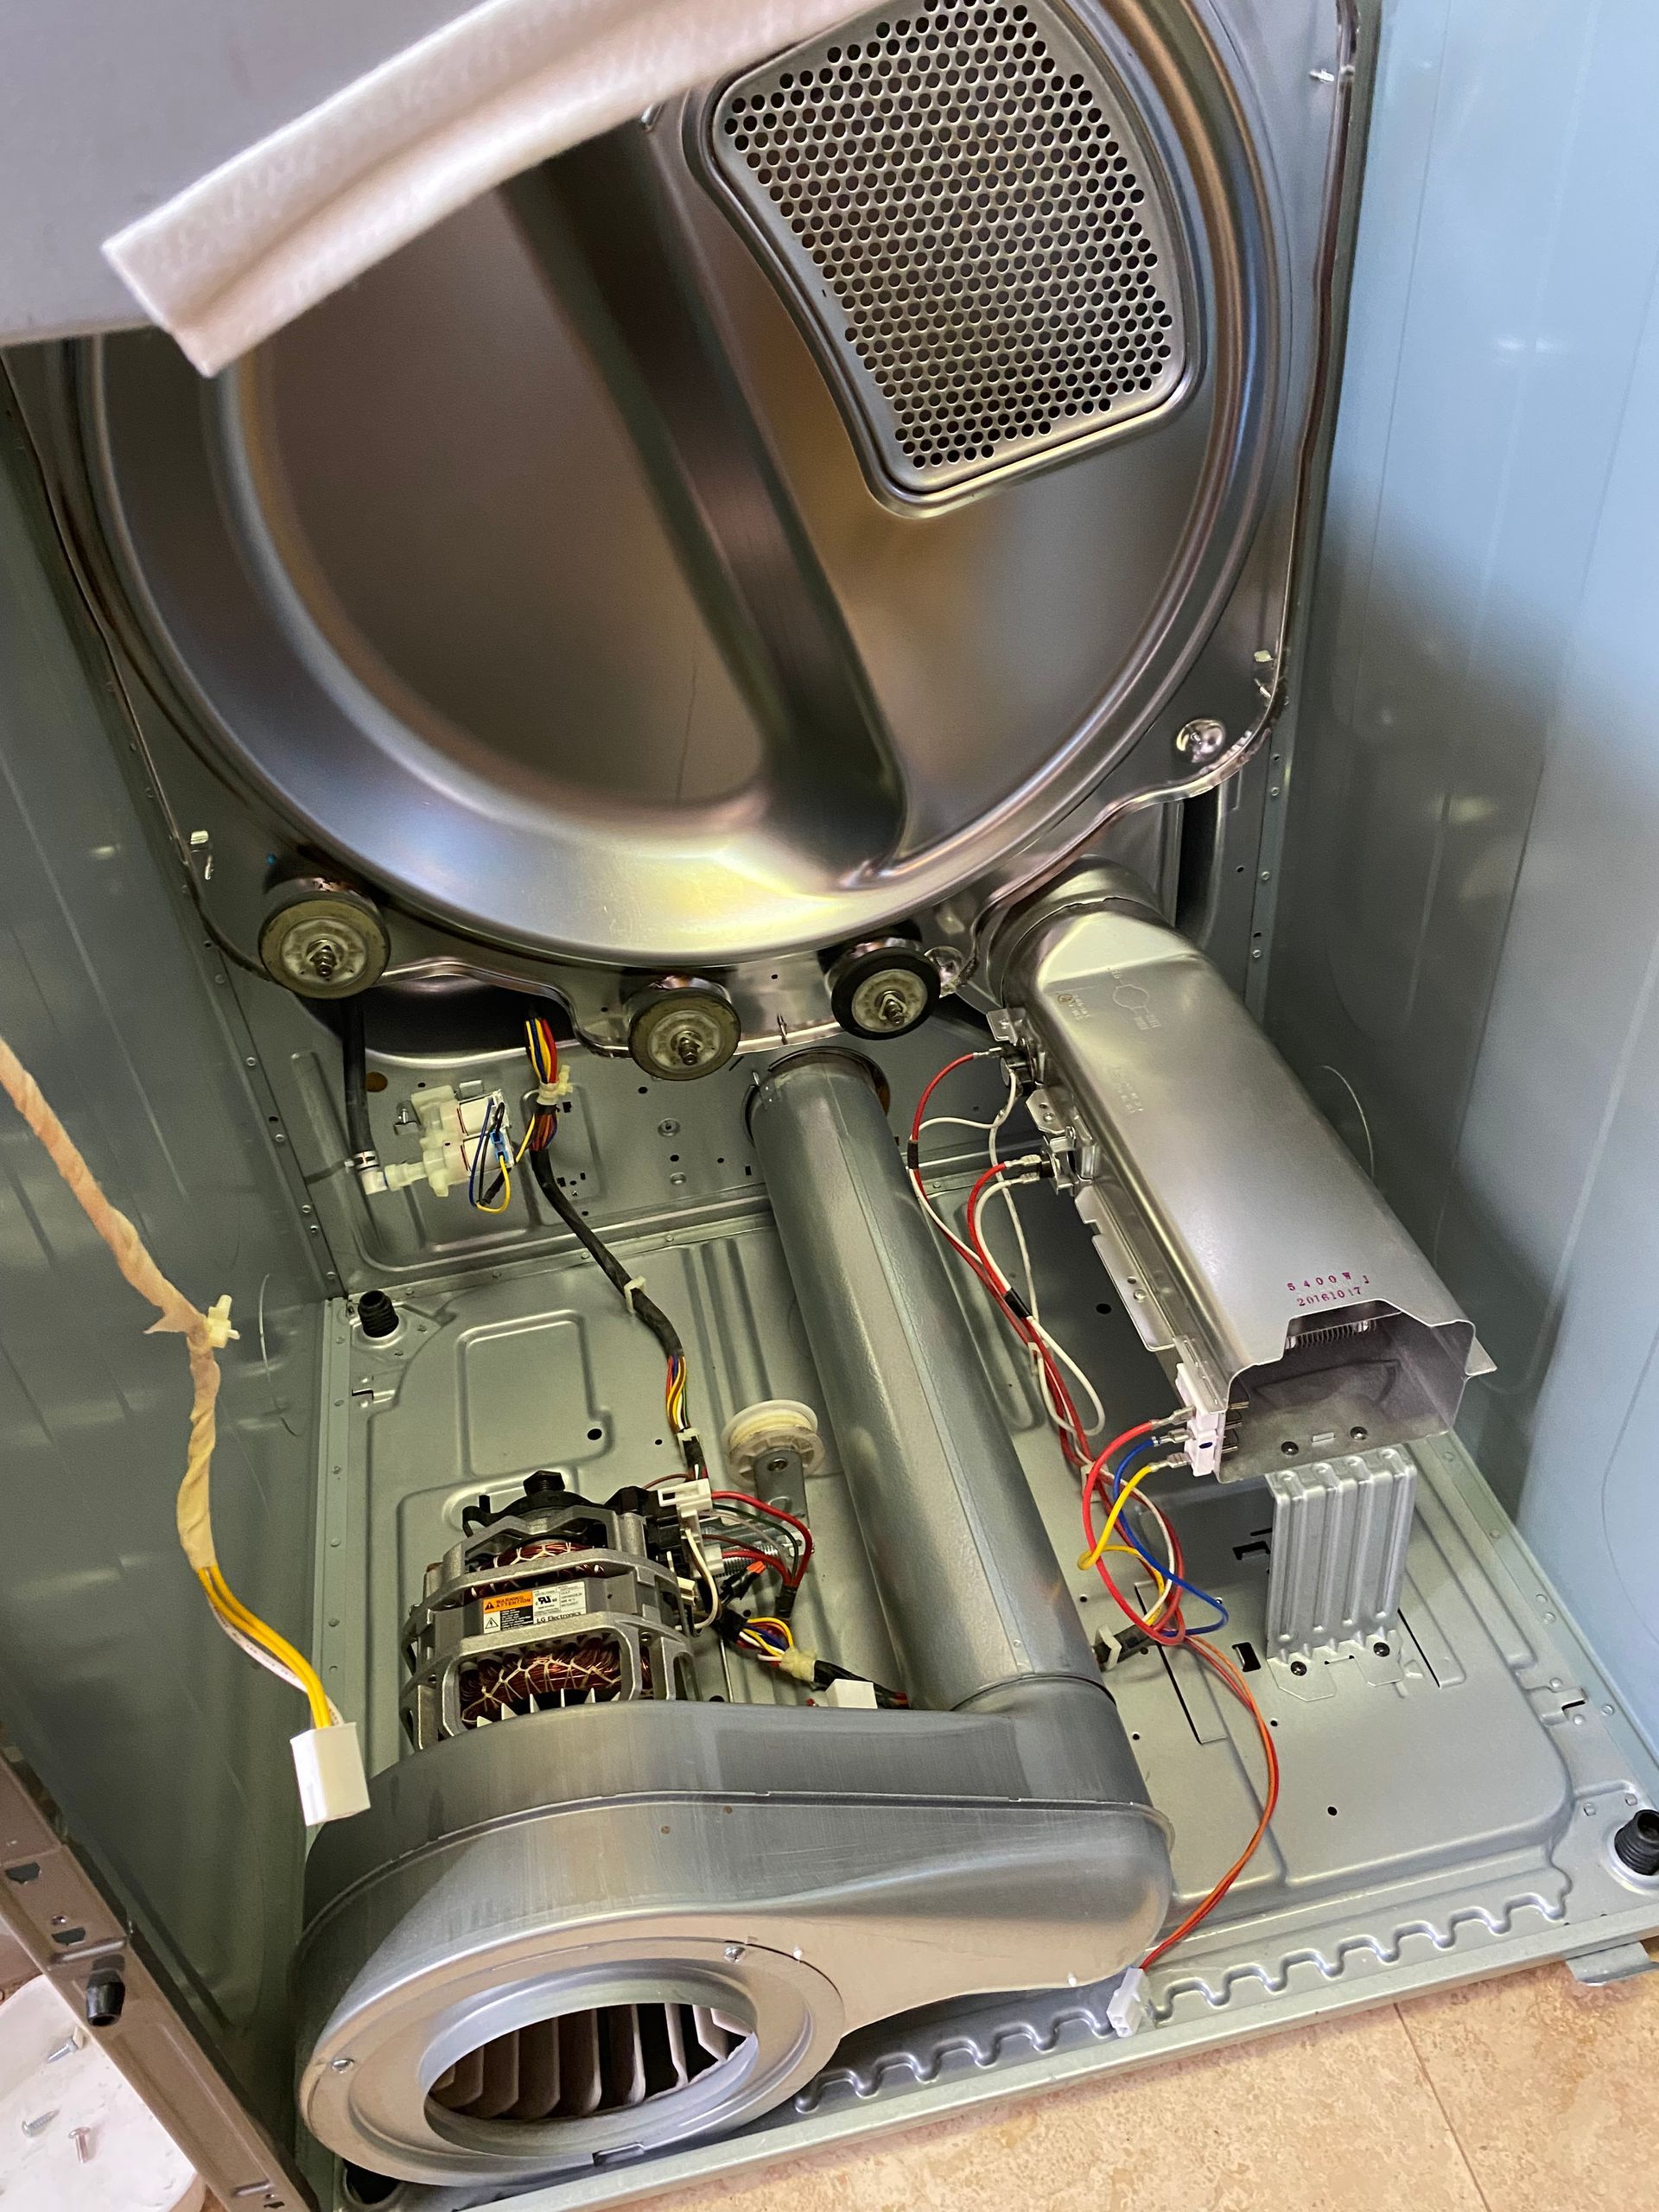 Dryer repair by Level Appliance Repair